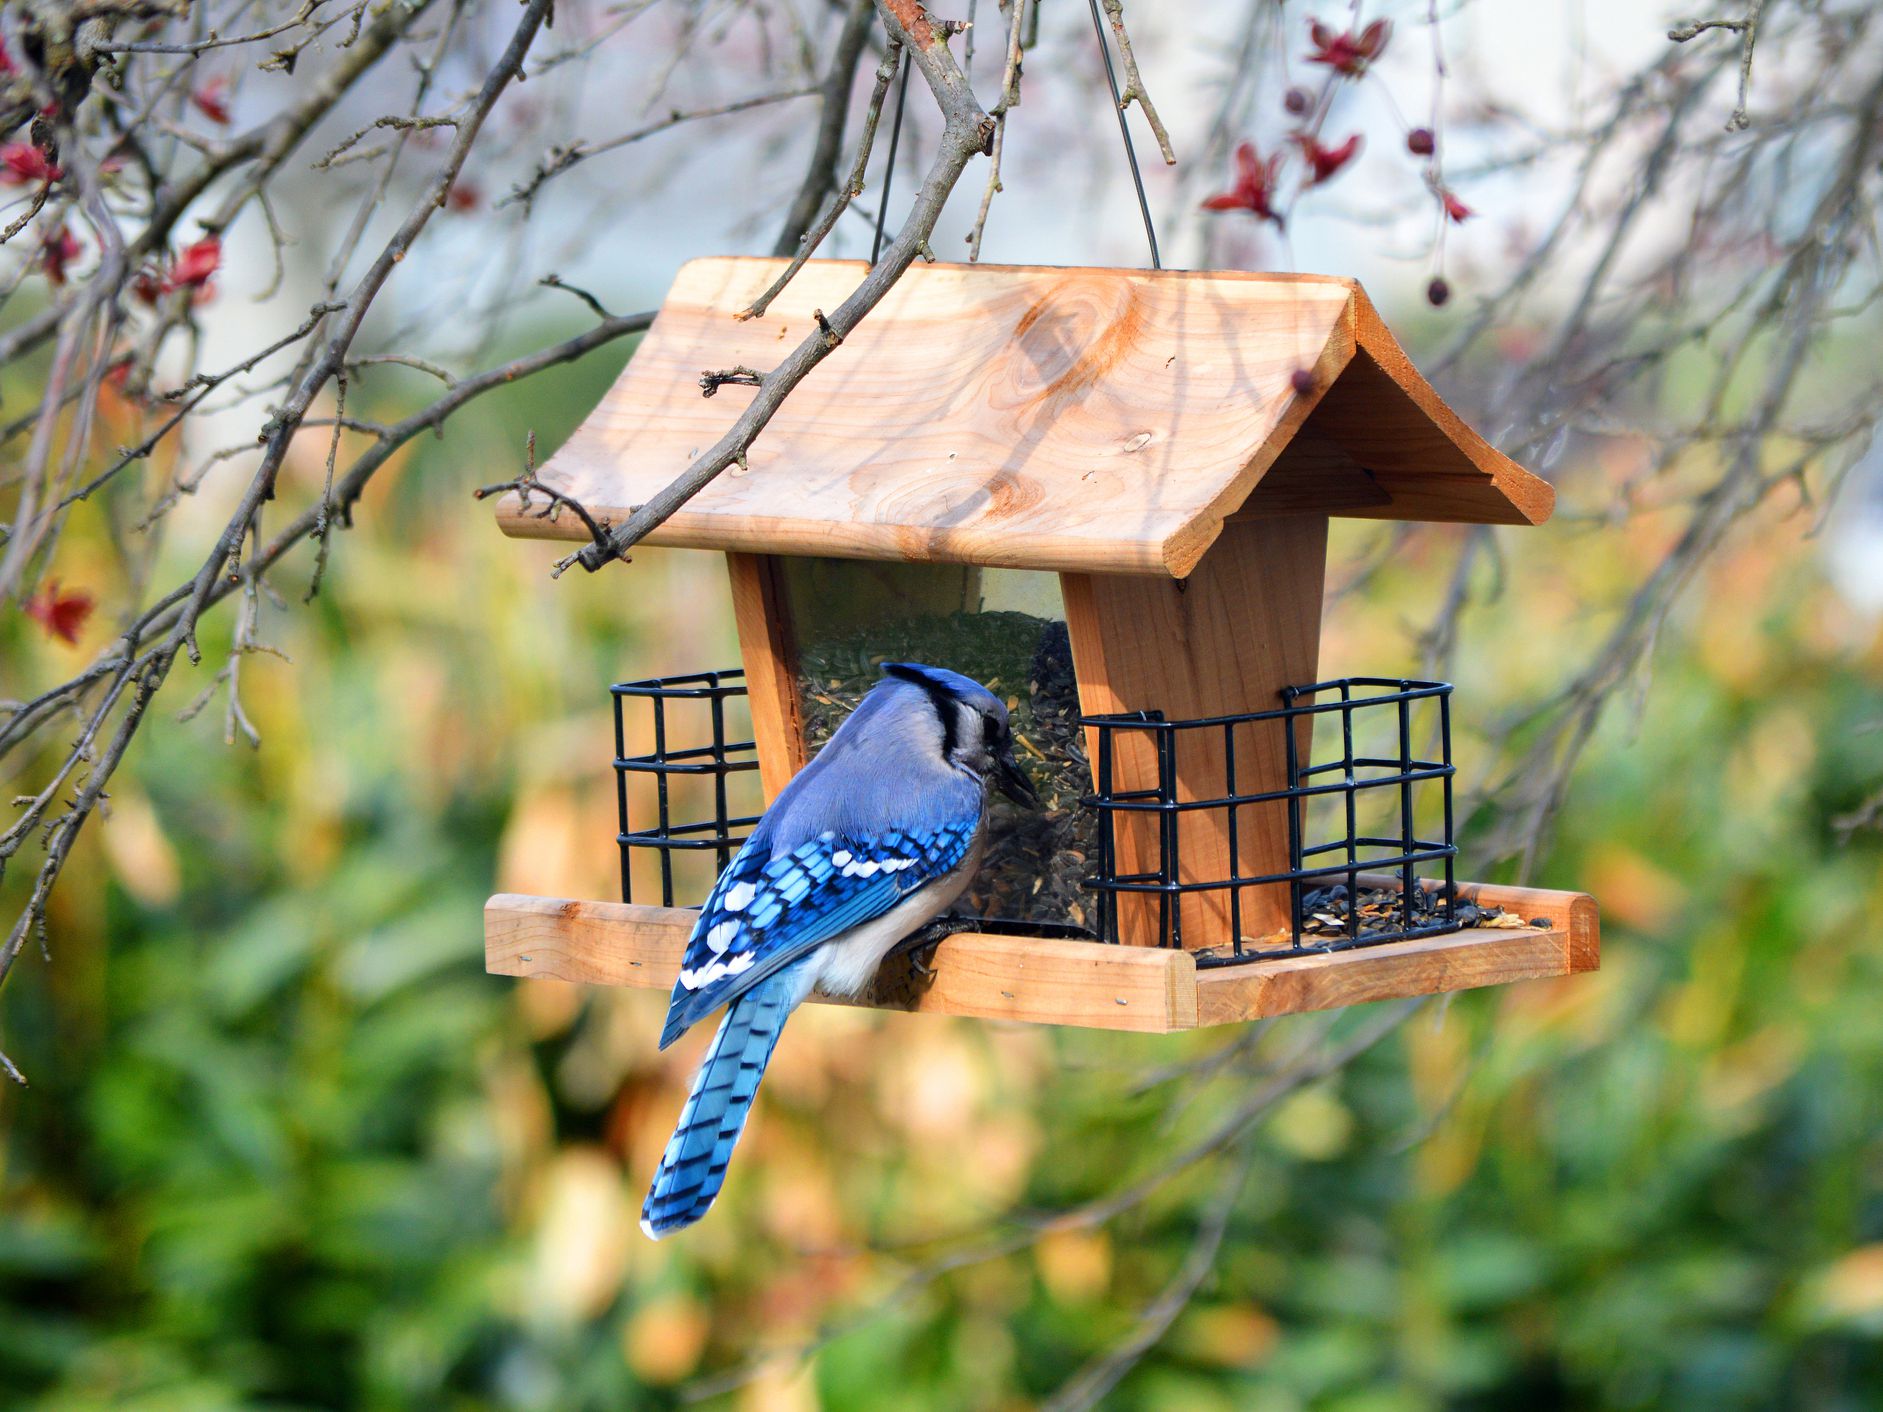 A blue jay perched on a bird feeder shaped like a house.